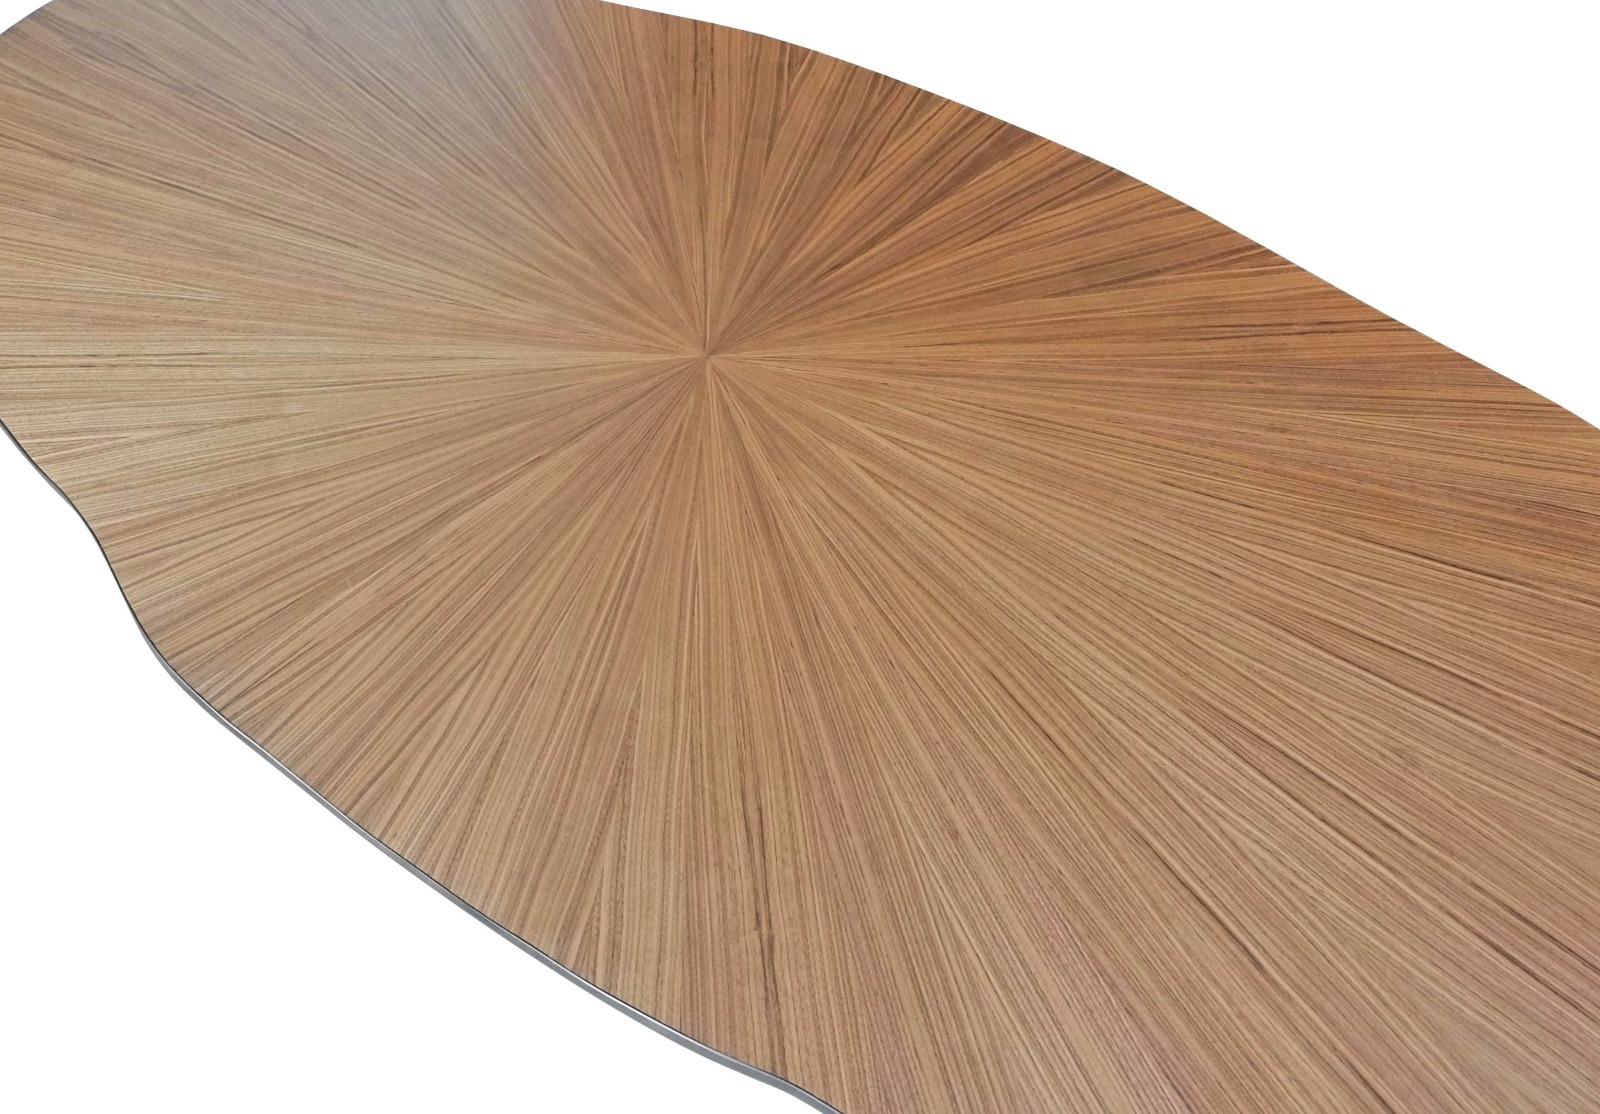 Modern New Design Dining Table in Wood with Sunburst Walnut Veneer For Sale